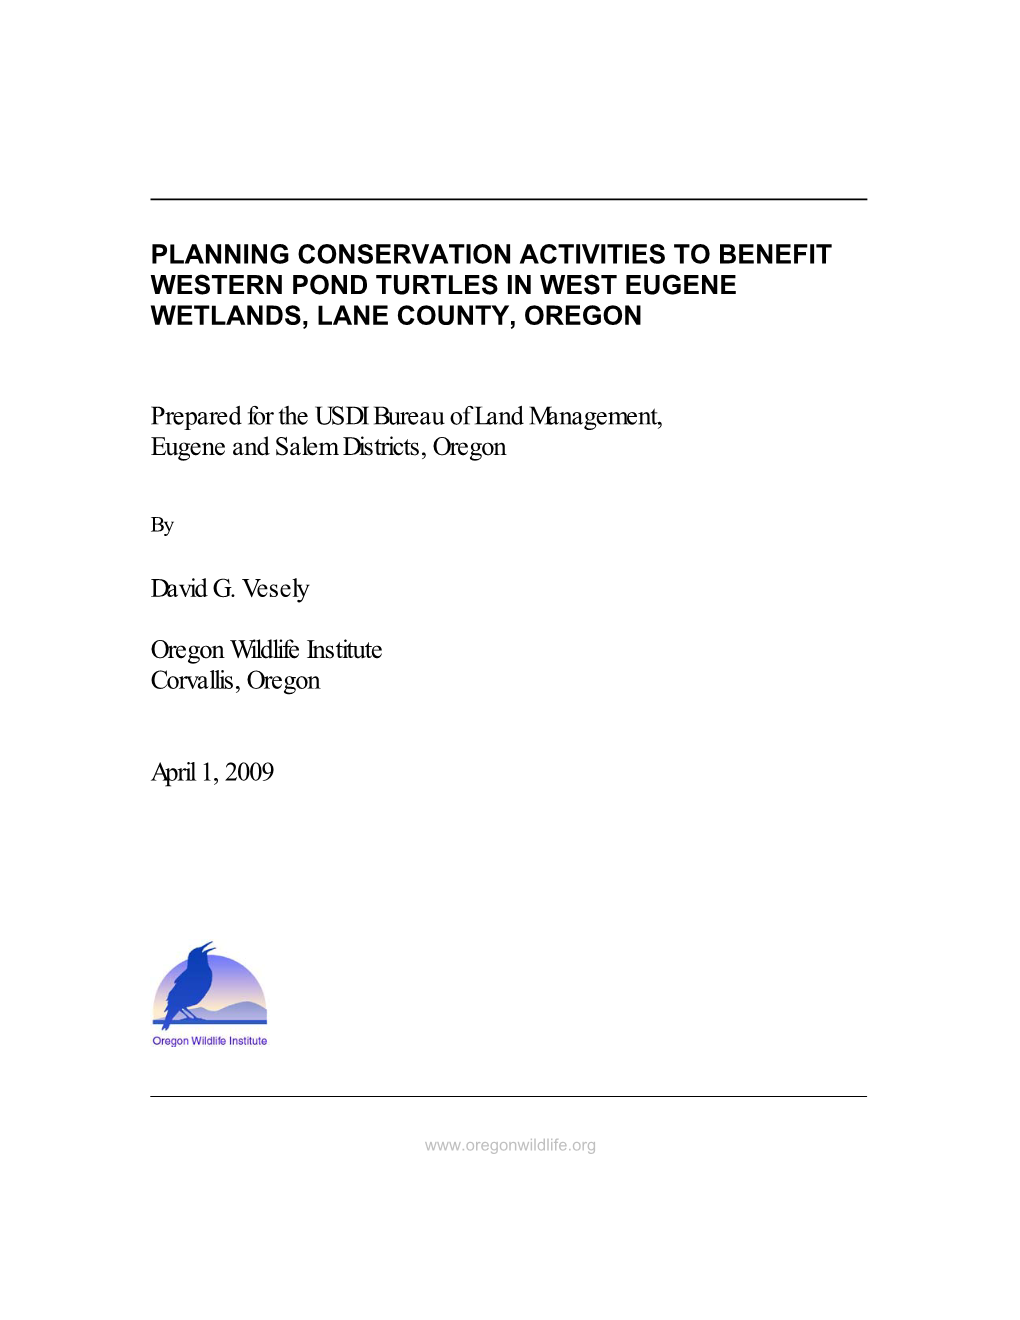 Planning Conservation Activities to Benefit Western Pond Turtles in West Eugene Wetlands, Lane County, Oregon